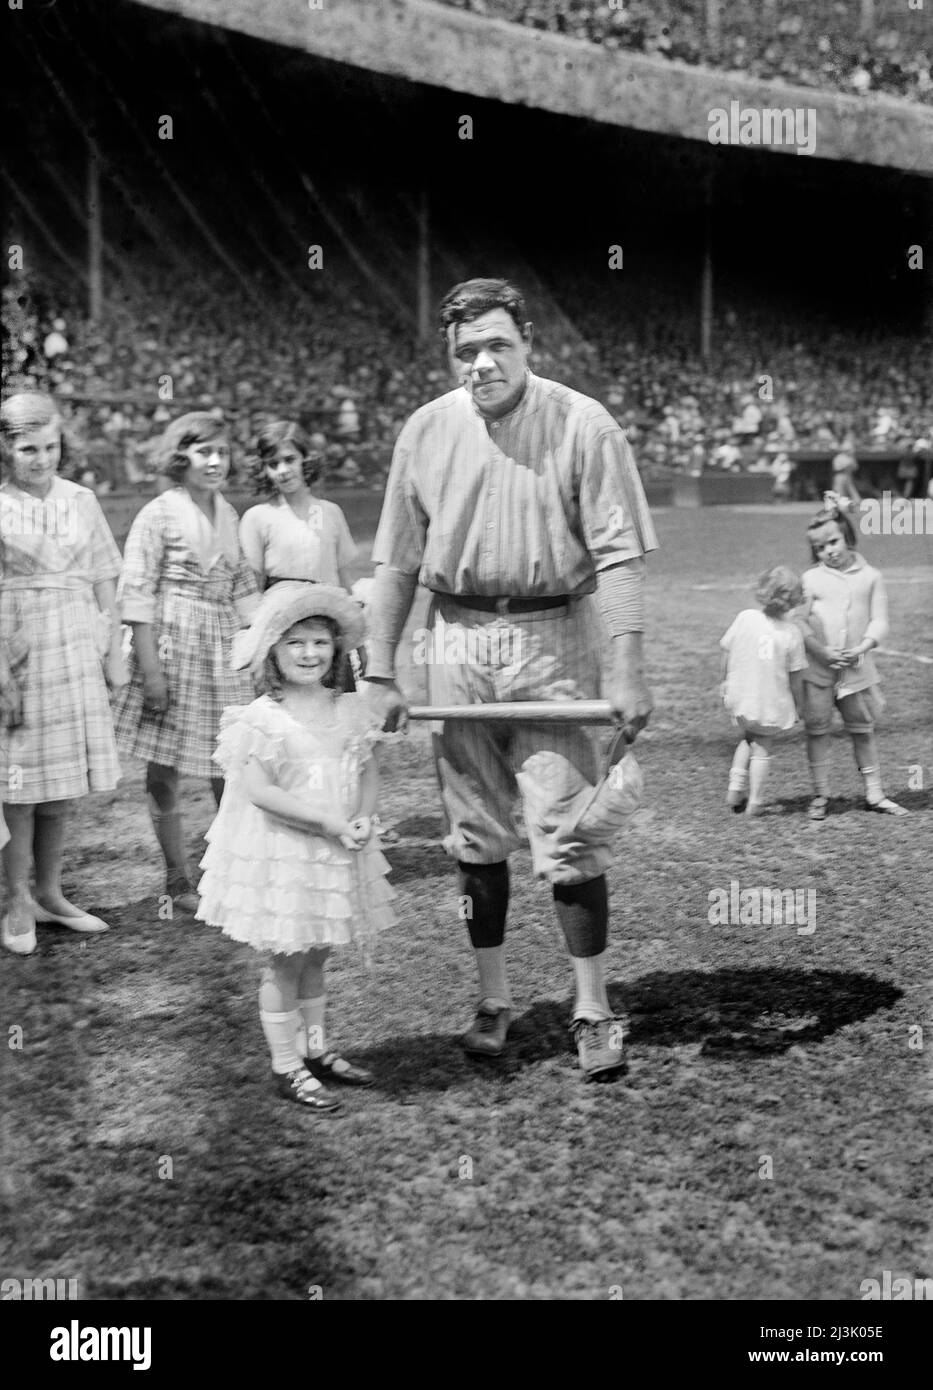 Babe Ruth, Major League Baseball Player, New York Yankees, Bain News Service, 1921 Stock Photo